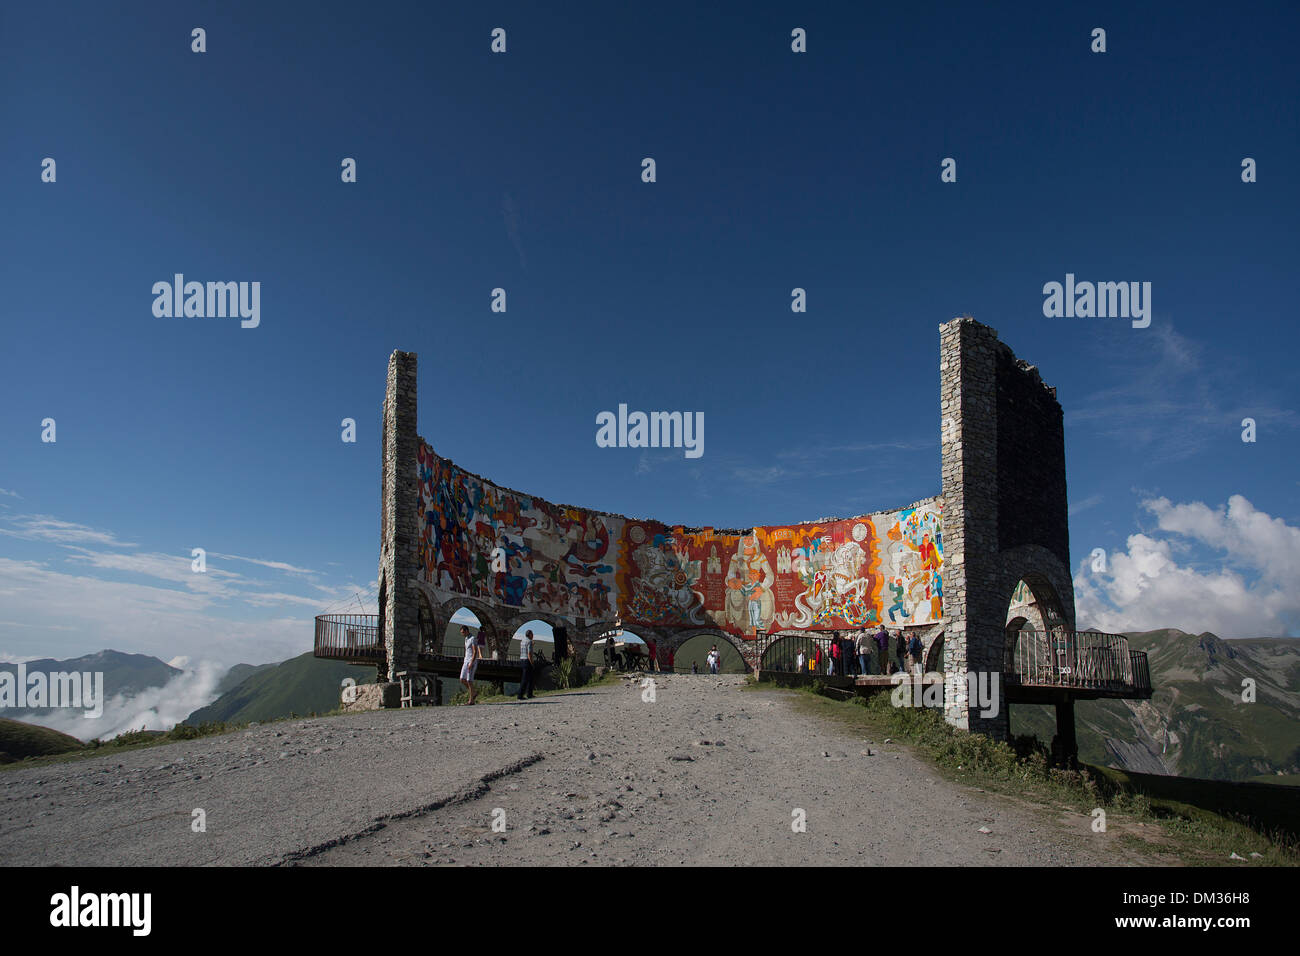 Gudauri russischen bunte Freundschaft Georgien Kaukasus Eurasia Suche Denkmal Kaukasus pass Bereich Top-Besucher Stockfoto